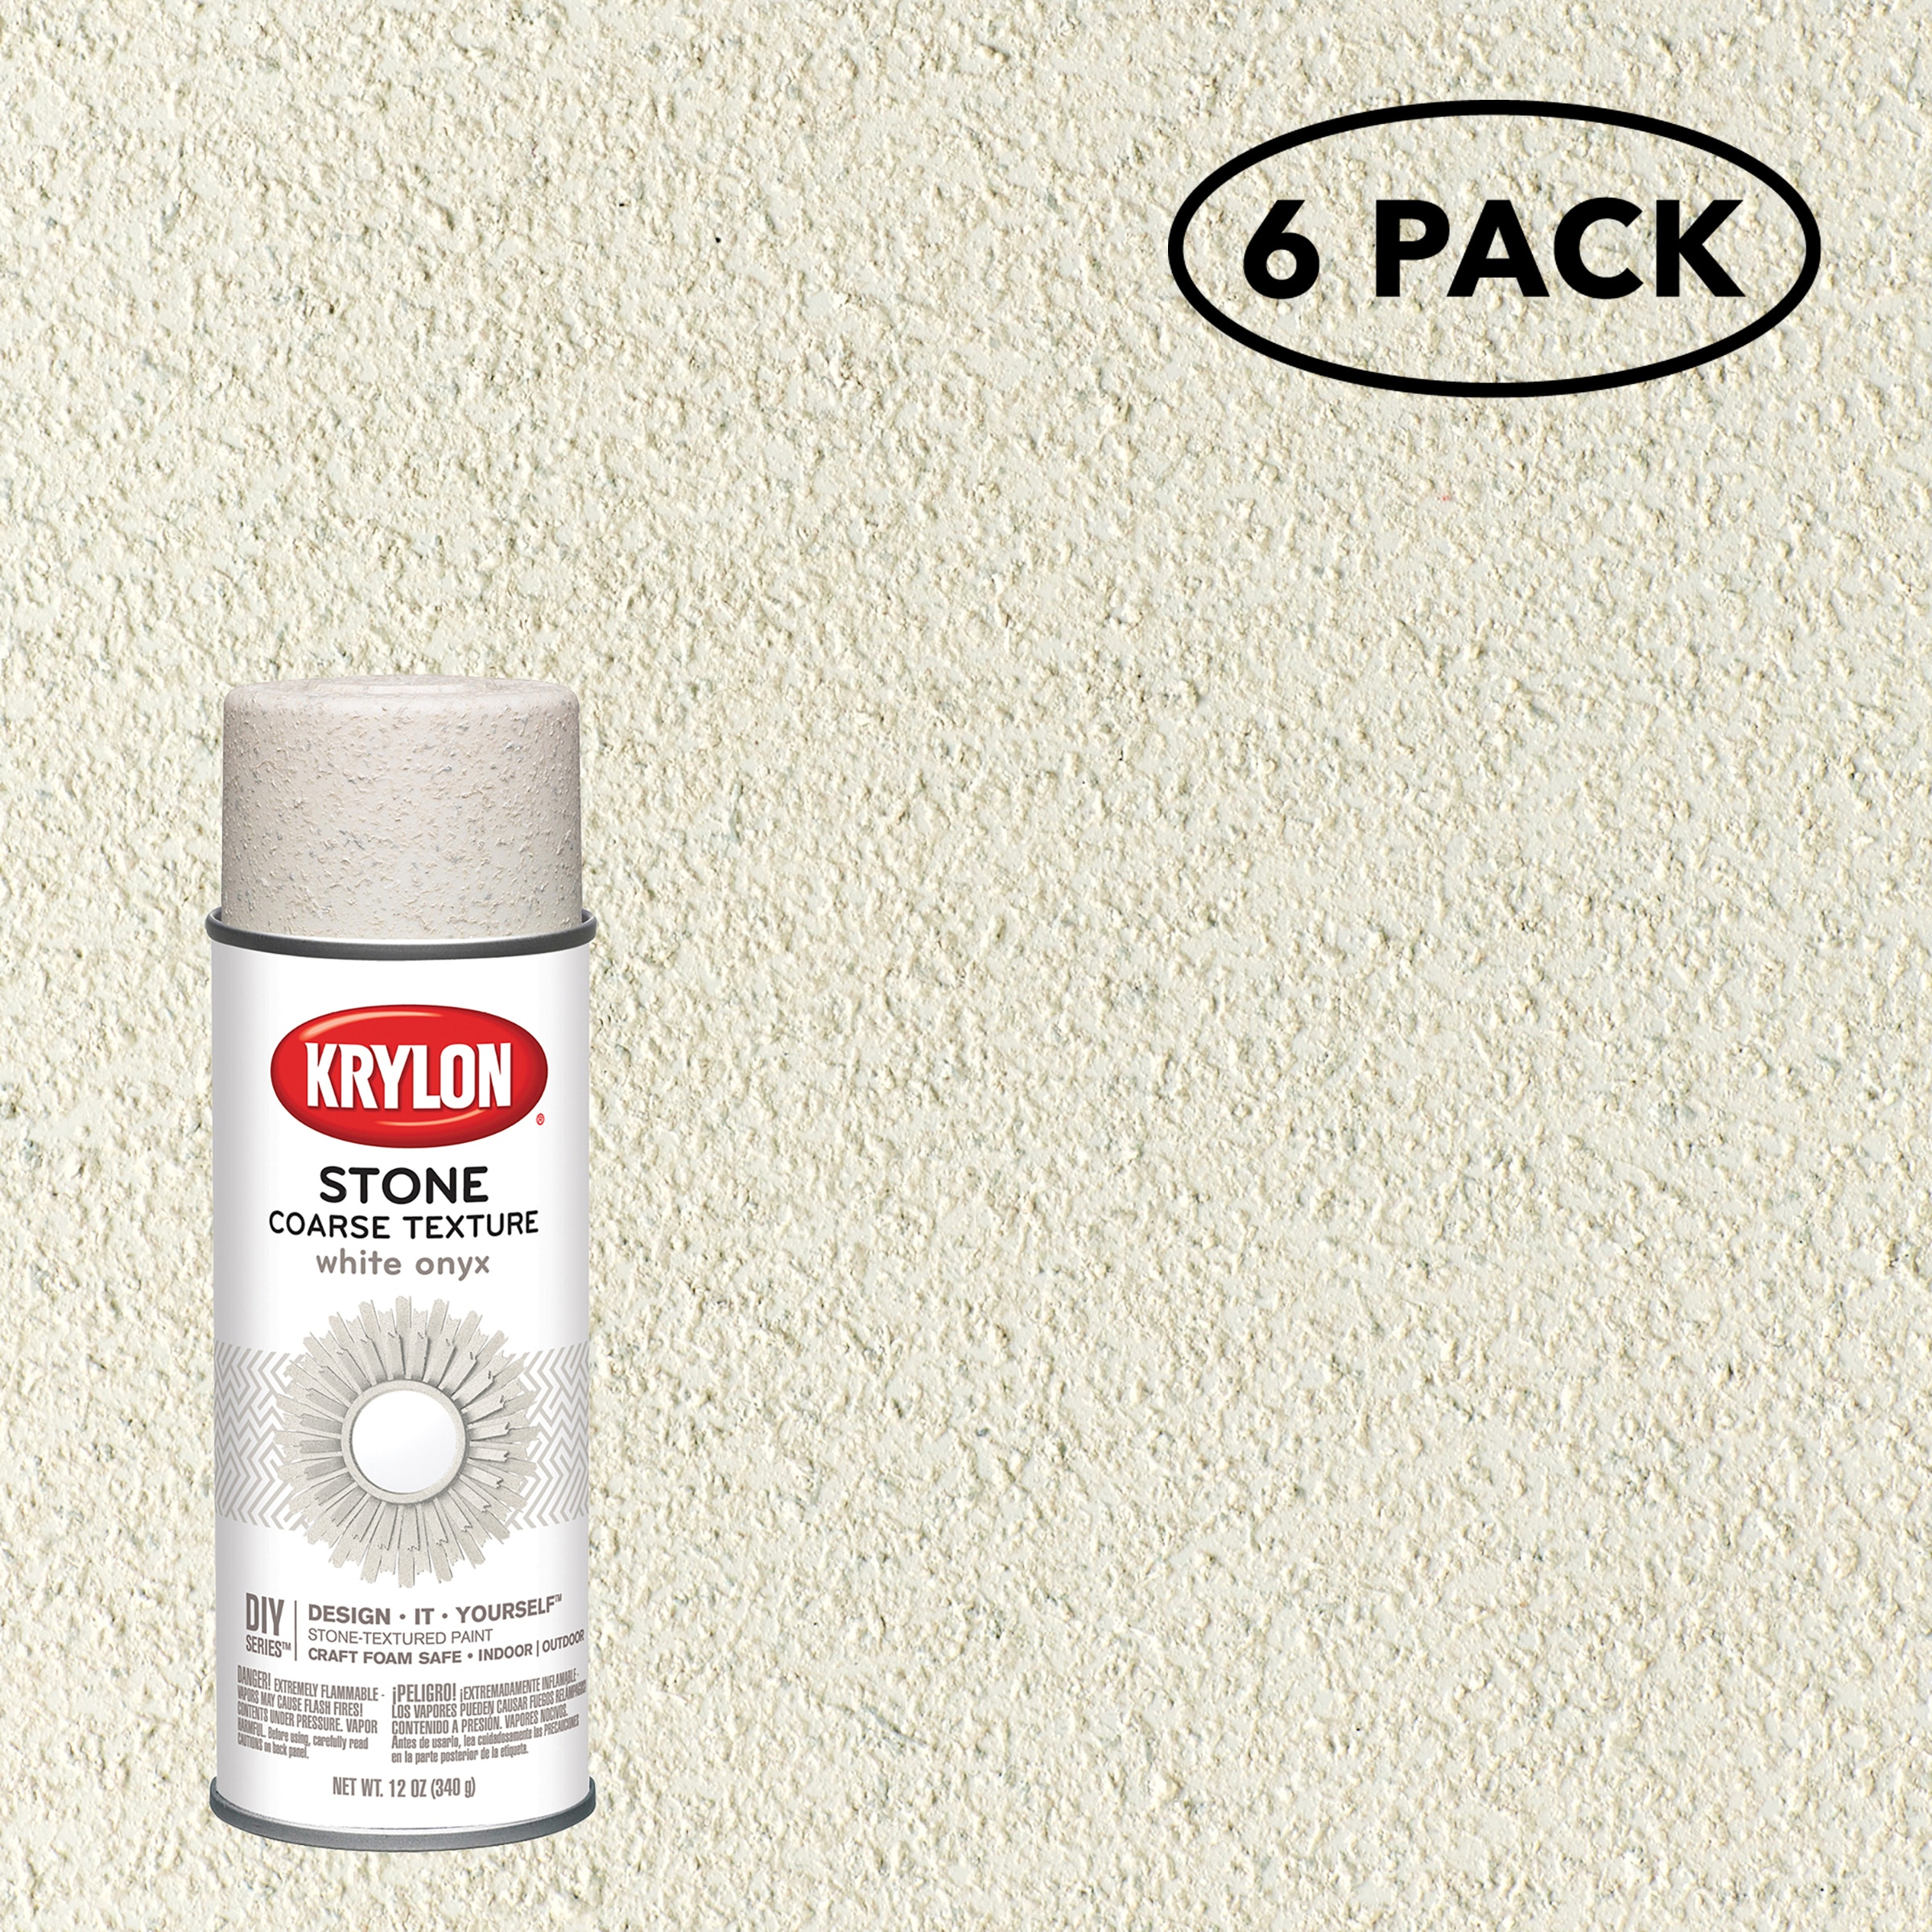 Krylon - Acrylic Enamel Spray Paint: Clear, Matte, 16 oz - 84249929 - MSC  Industrial Supply